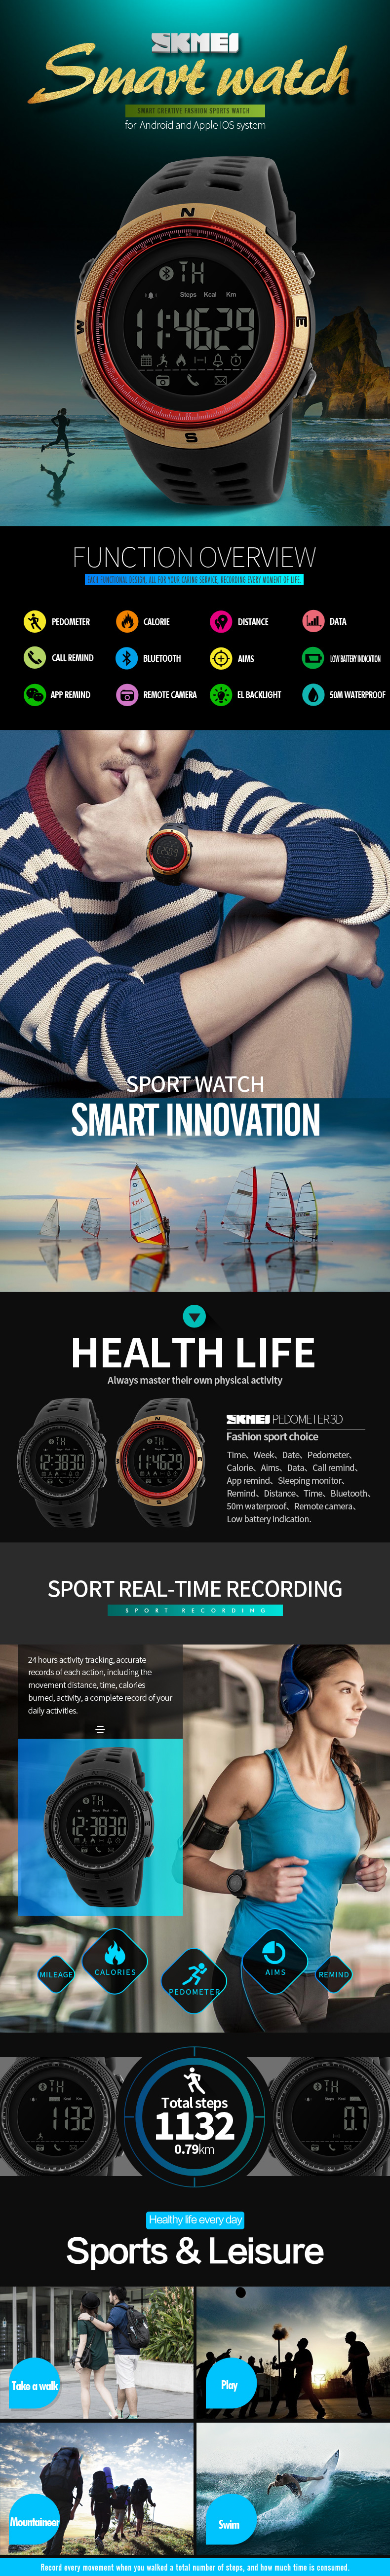 SKMEI-1250-Bluetooth-Smart-Watch-Call-Message-Notification-Pedometer-50M-Waterproof-Sports-Watch-1158853